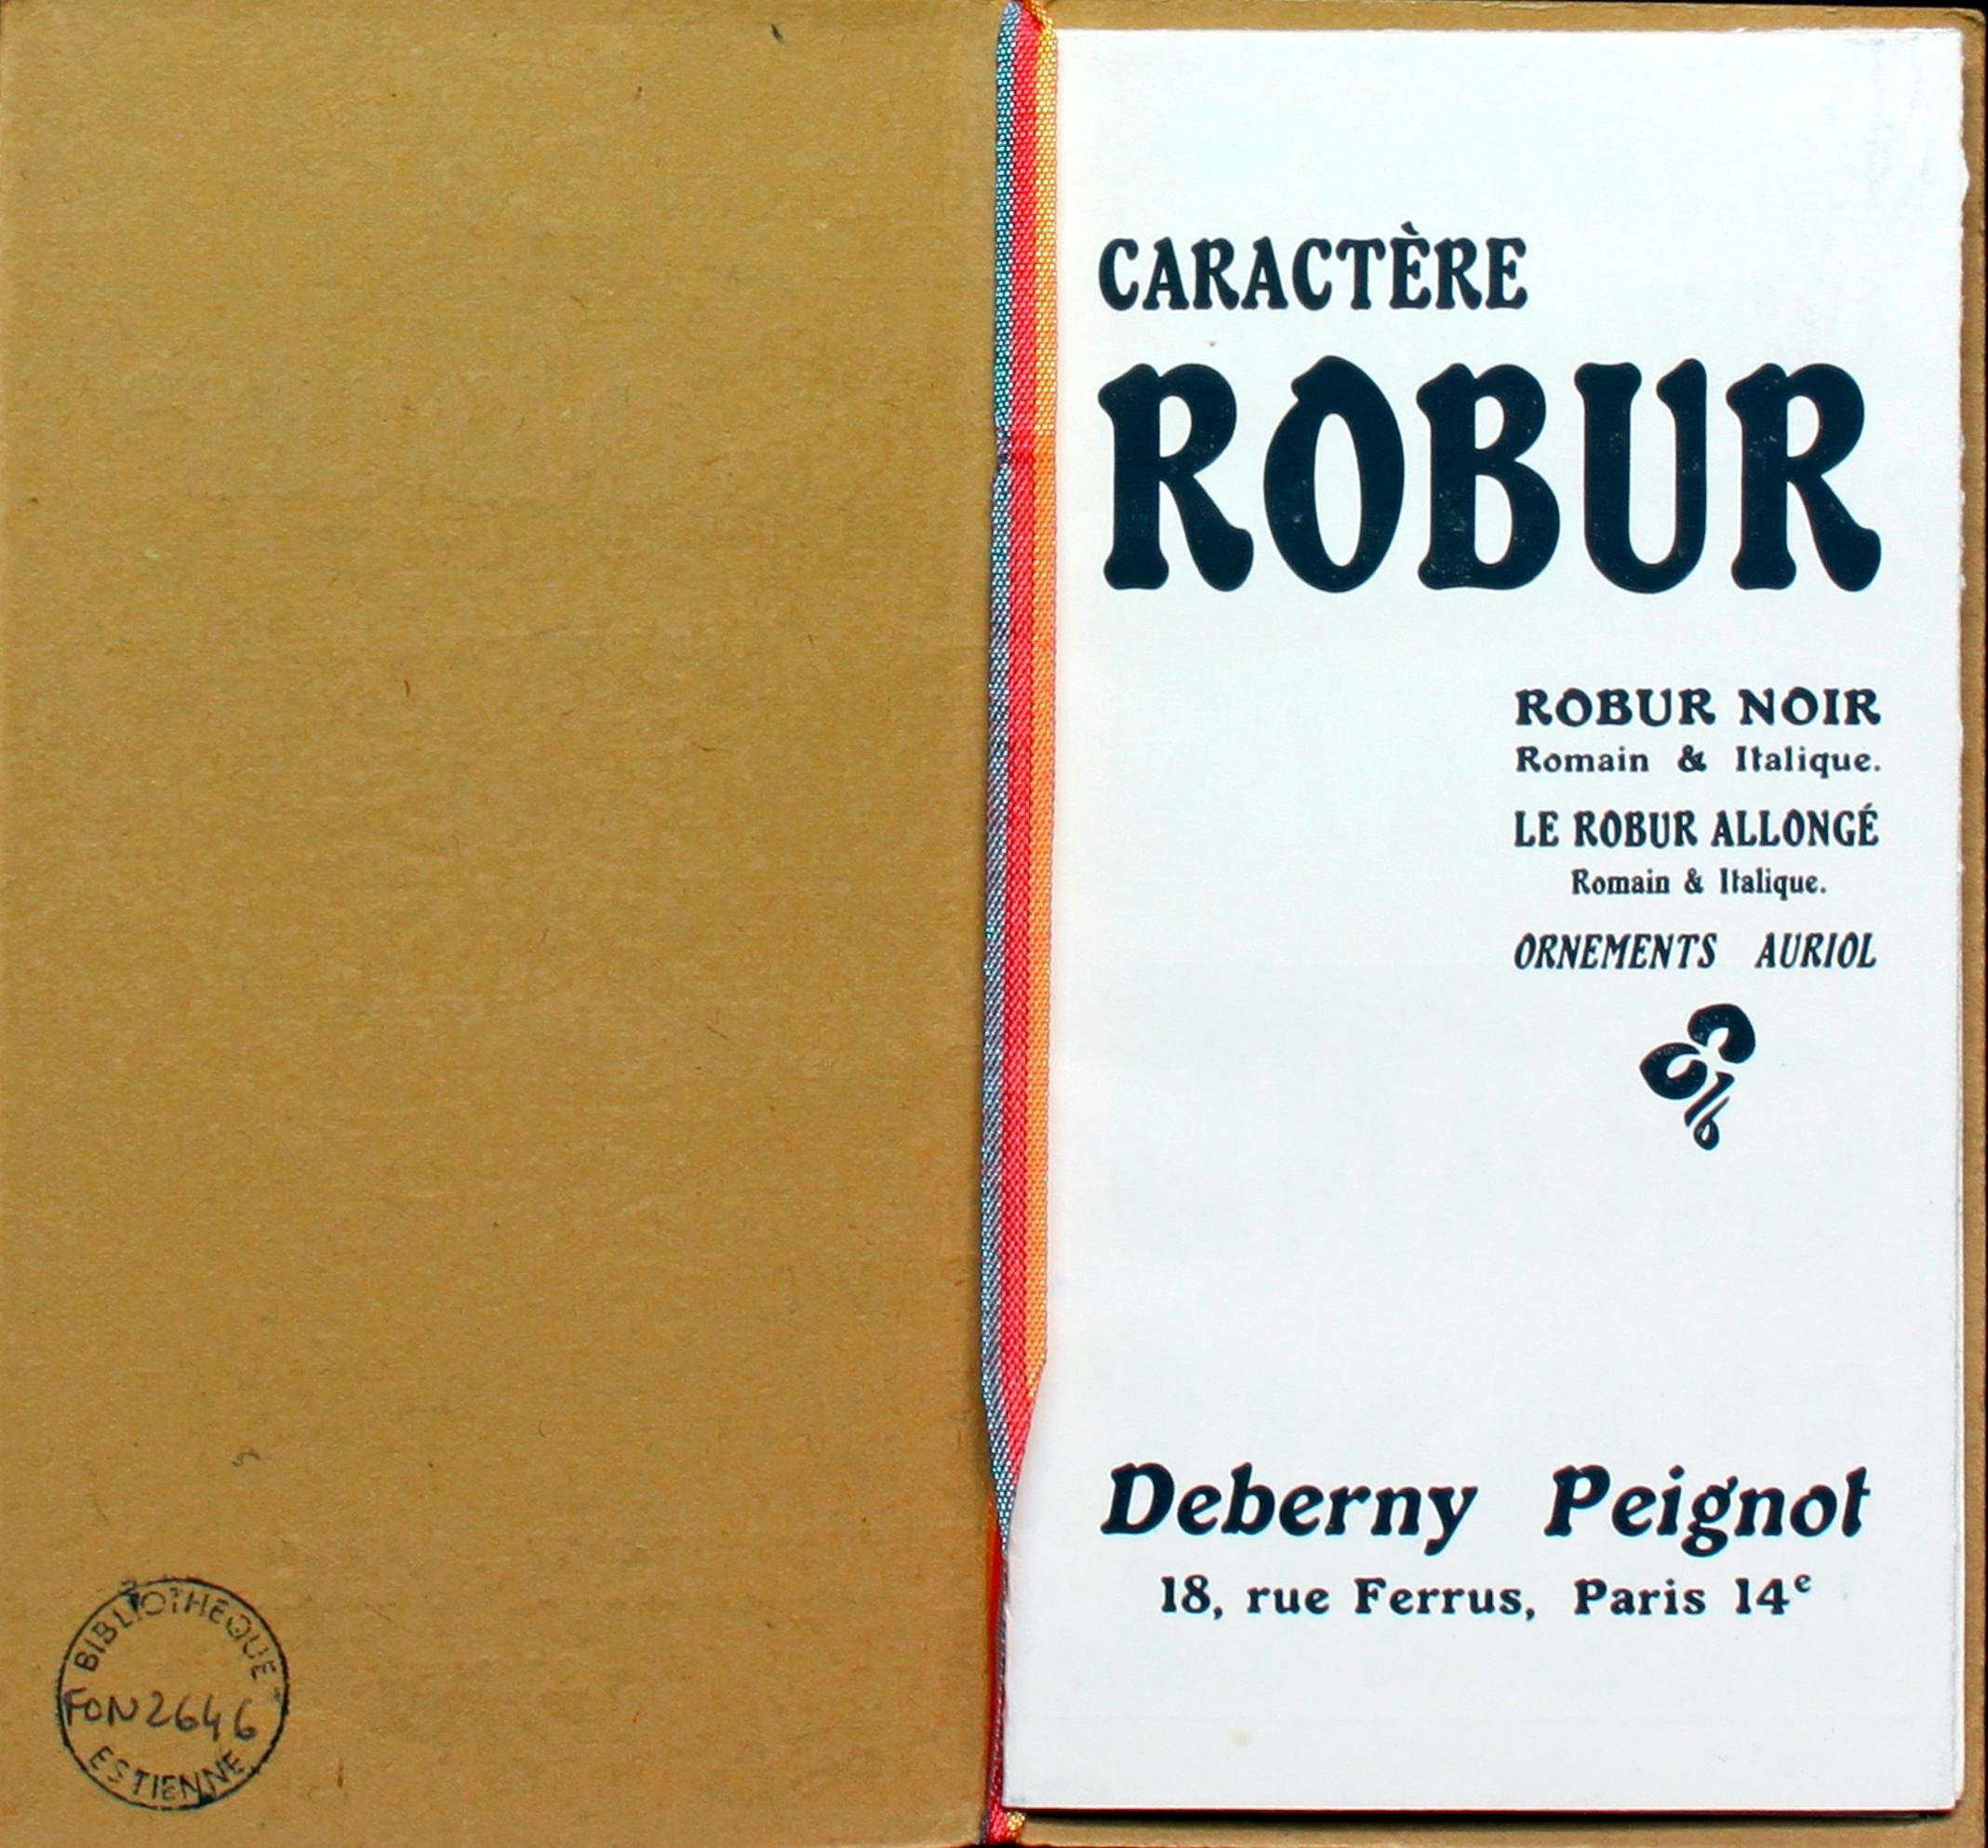 Deberny Peignot’s “Robur”